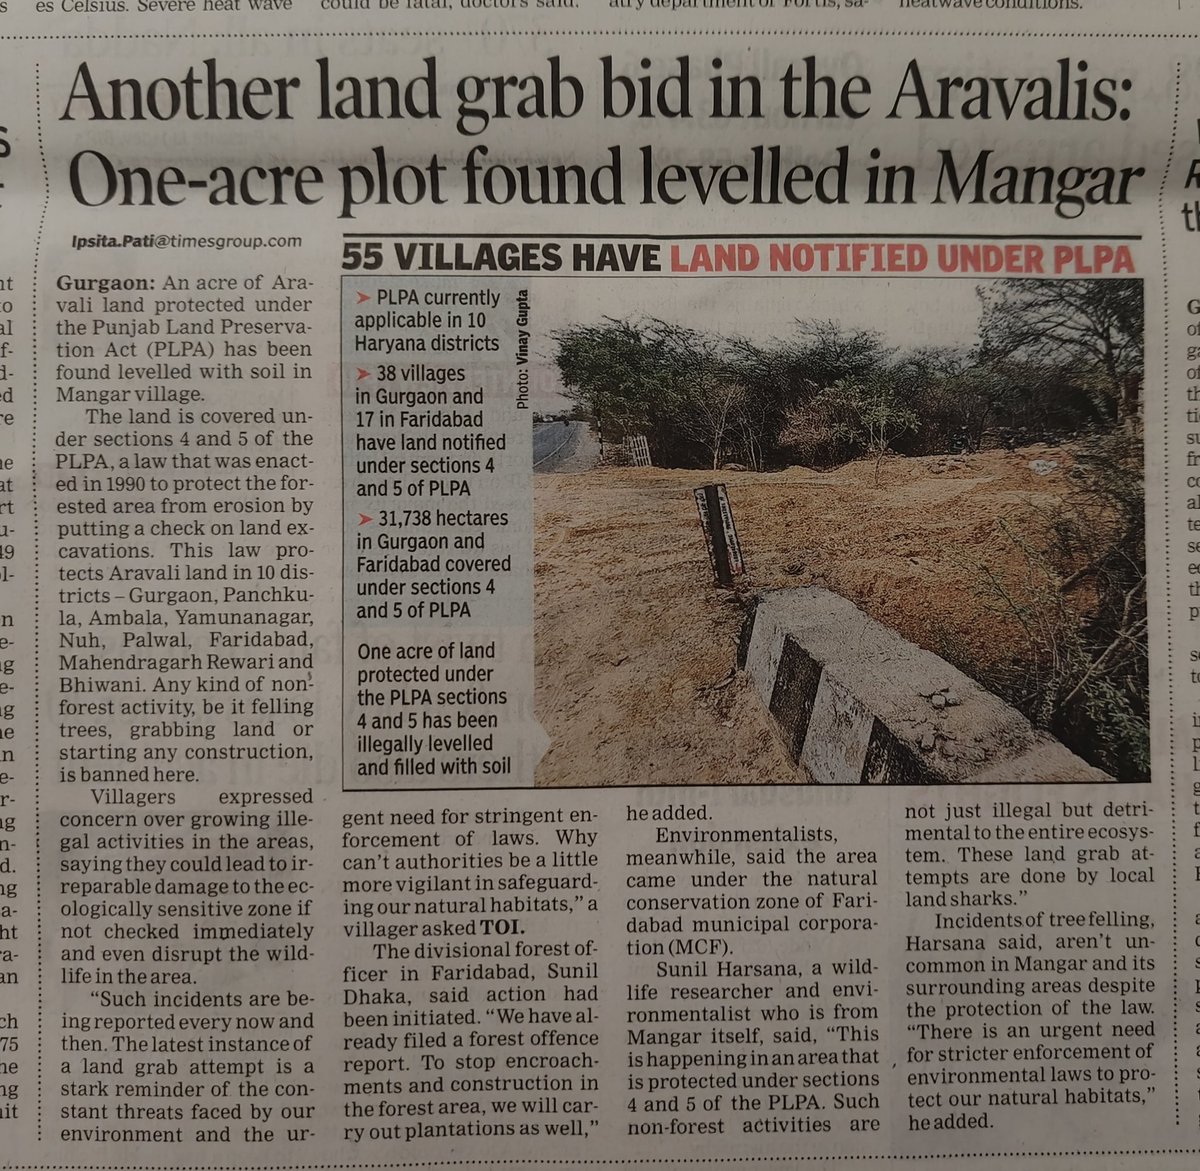 Another land grab bid in #Aravalis, 1-acre plot found levelled in Mangar @debadityo @SunilHarsana @ActivistGulati @rameshpandeyifs @pargaien @rahuulchoudhary timesofindia.indiatimes.com/city/gurgaon/a…